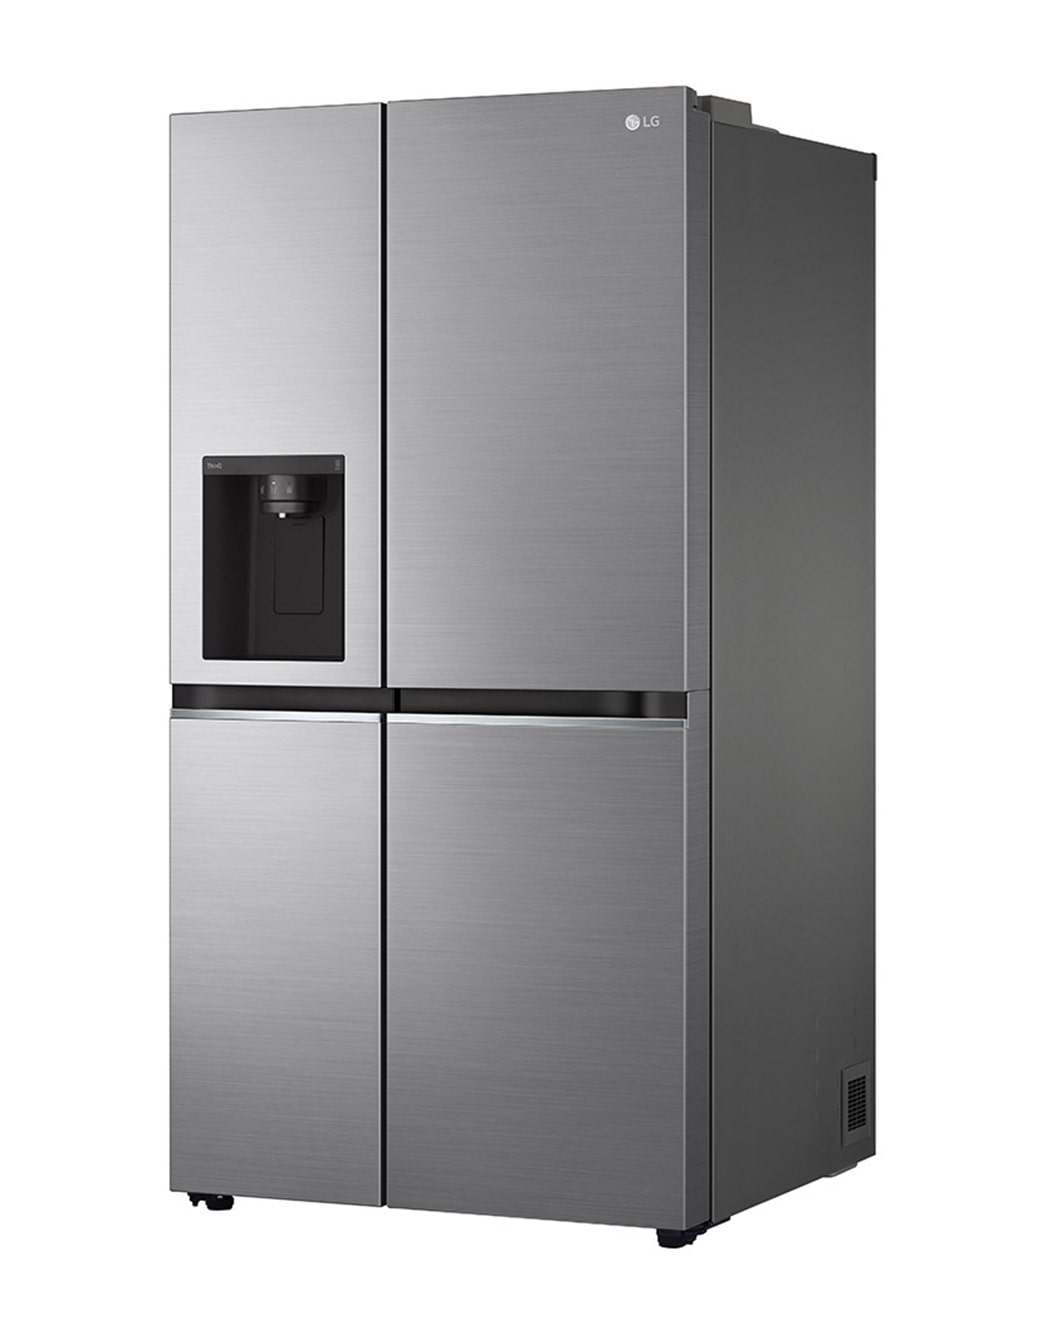 Refrigerador Lg 27 Pies Plata Platino - VS27LNIP